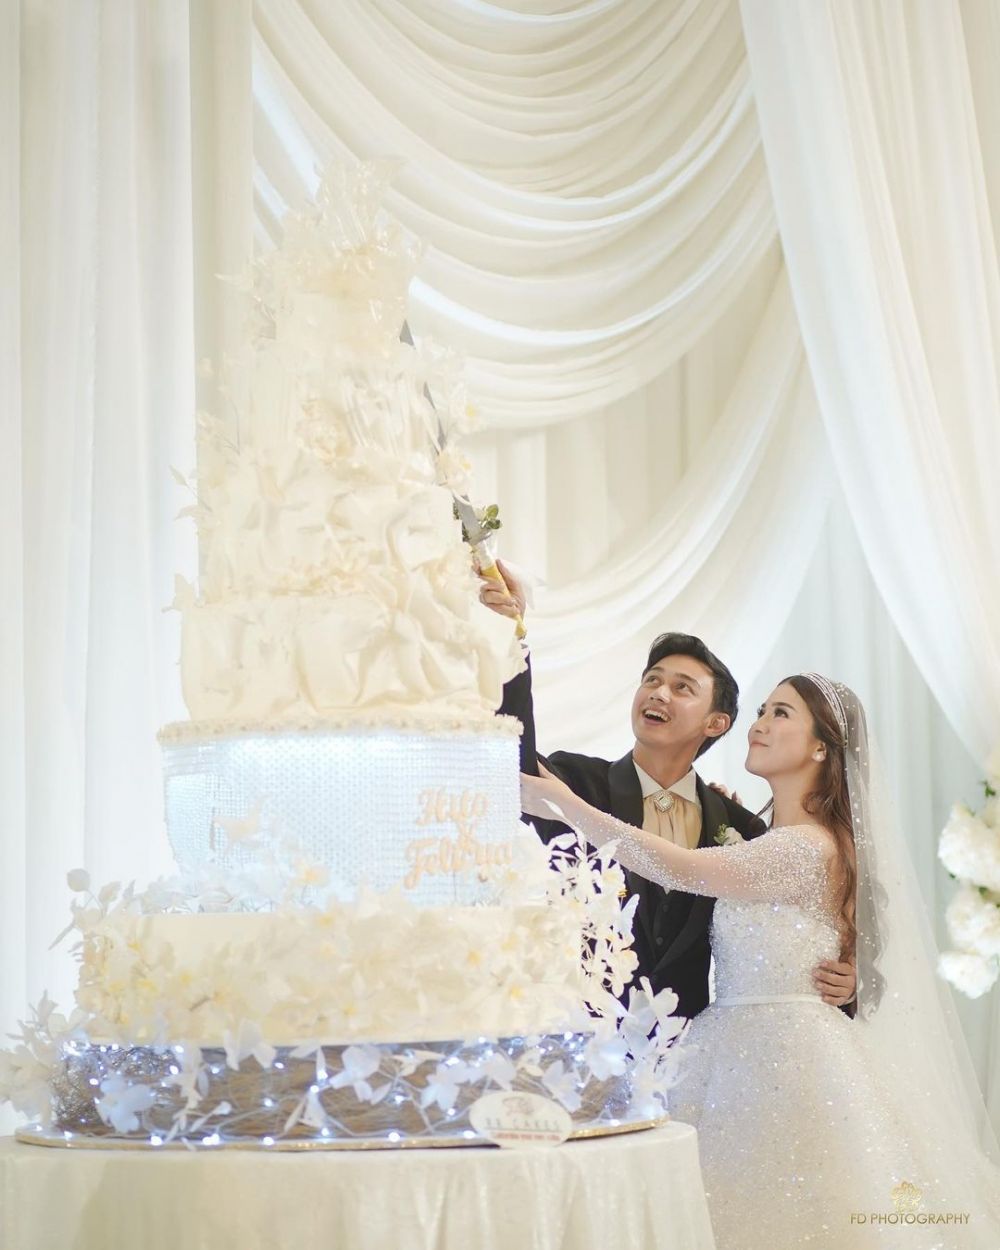 Harga Wedding Cake